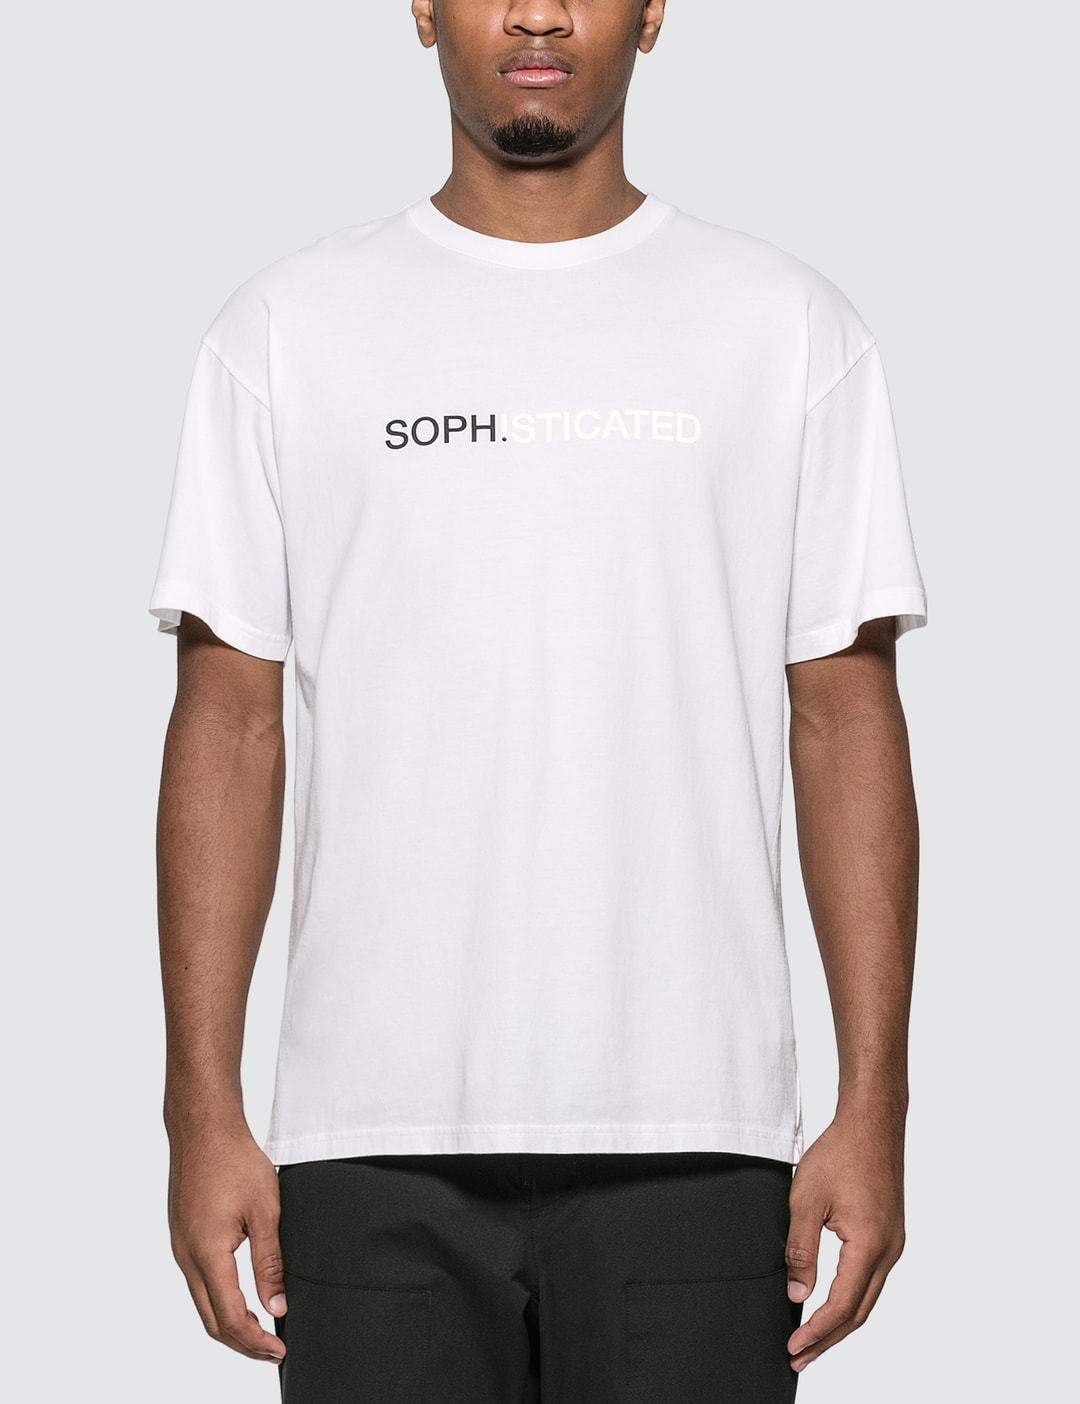 Philosophy T-shirt Placeholder Image